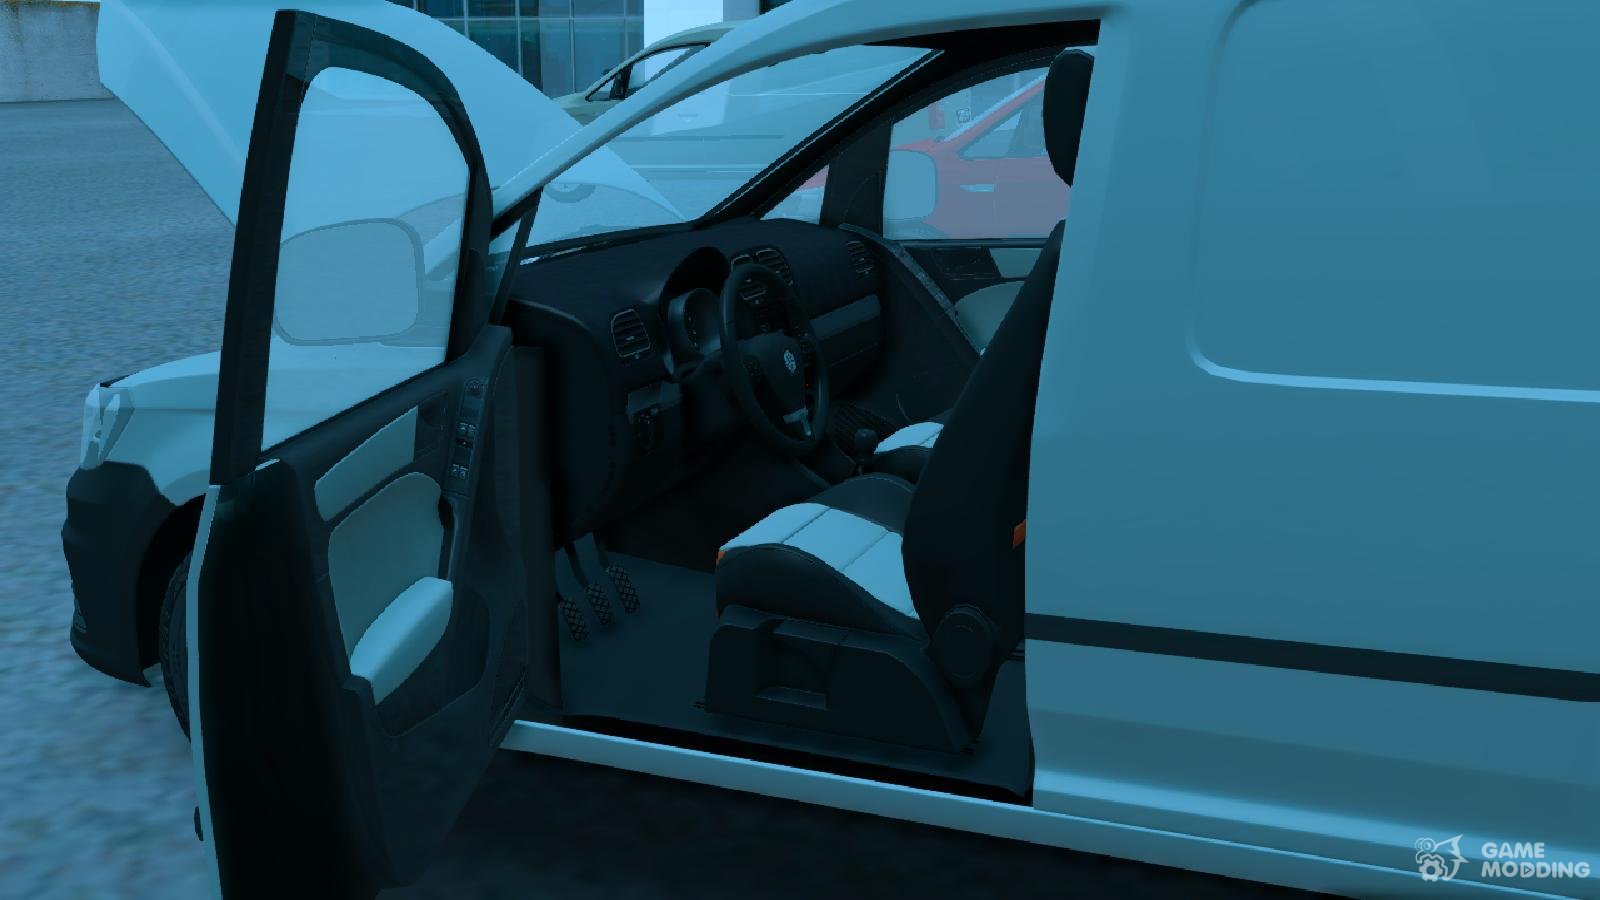 Volkswagen Caddy (2015-2020) for GTA San Andreas